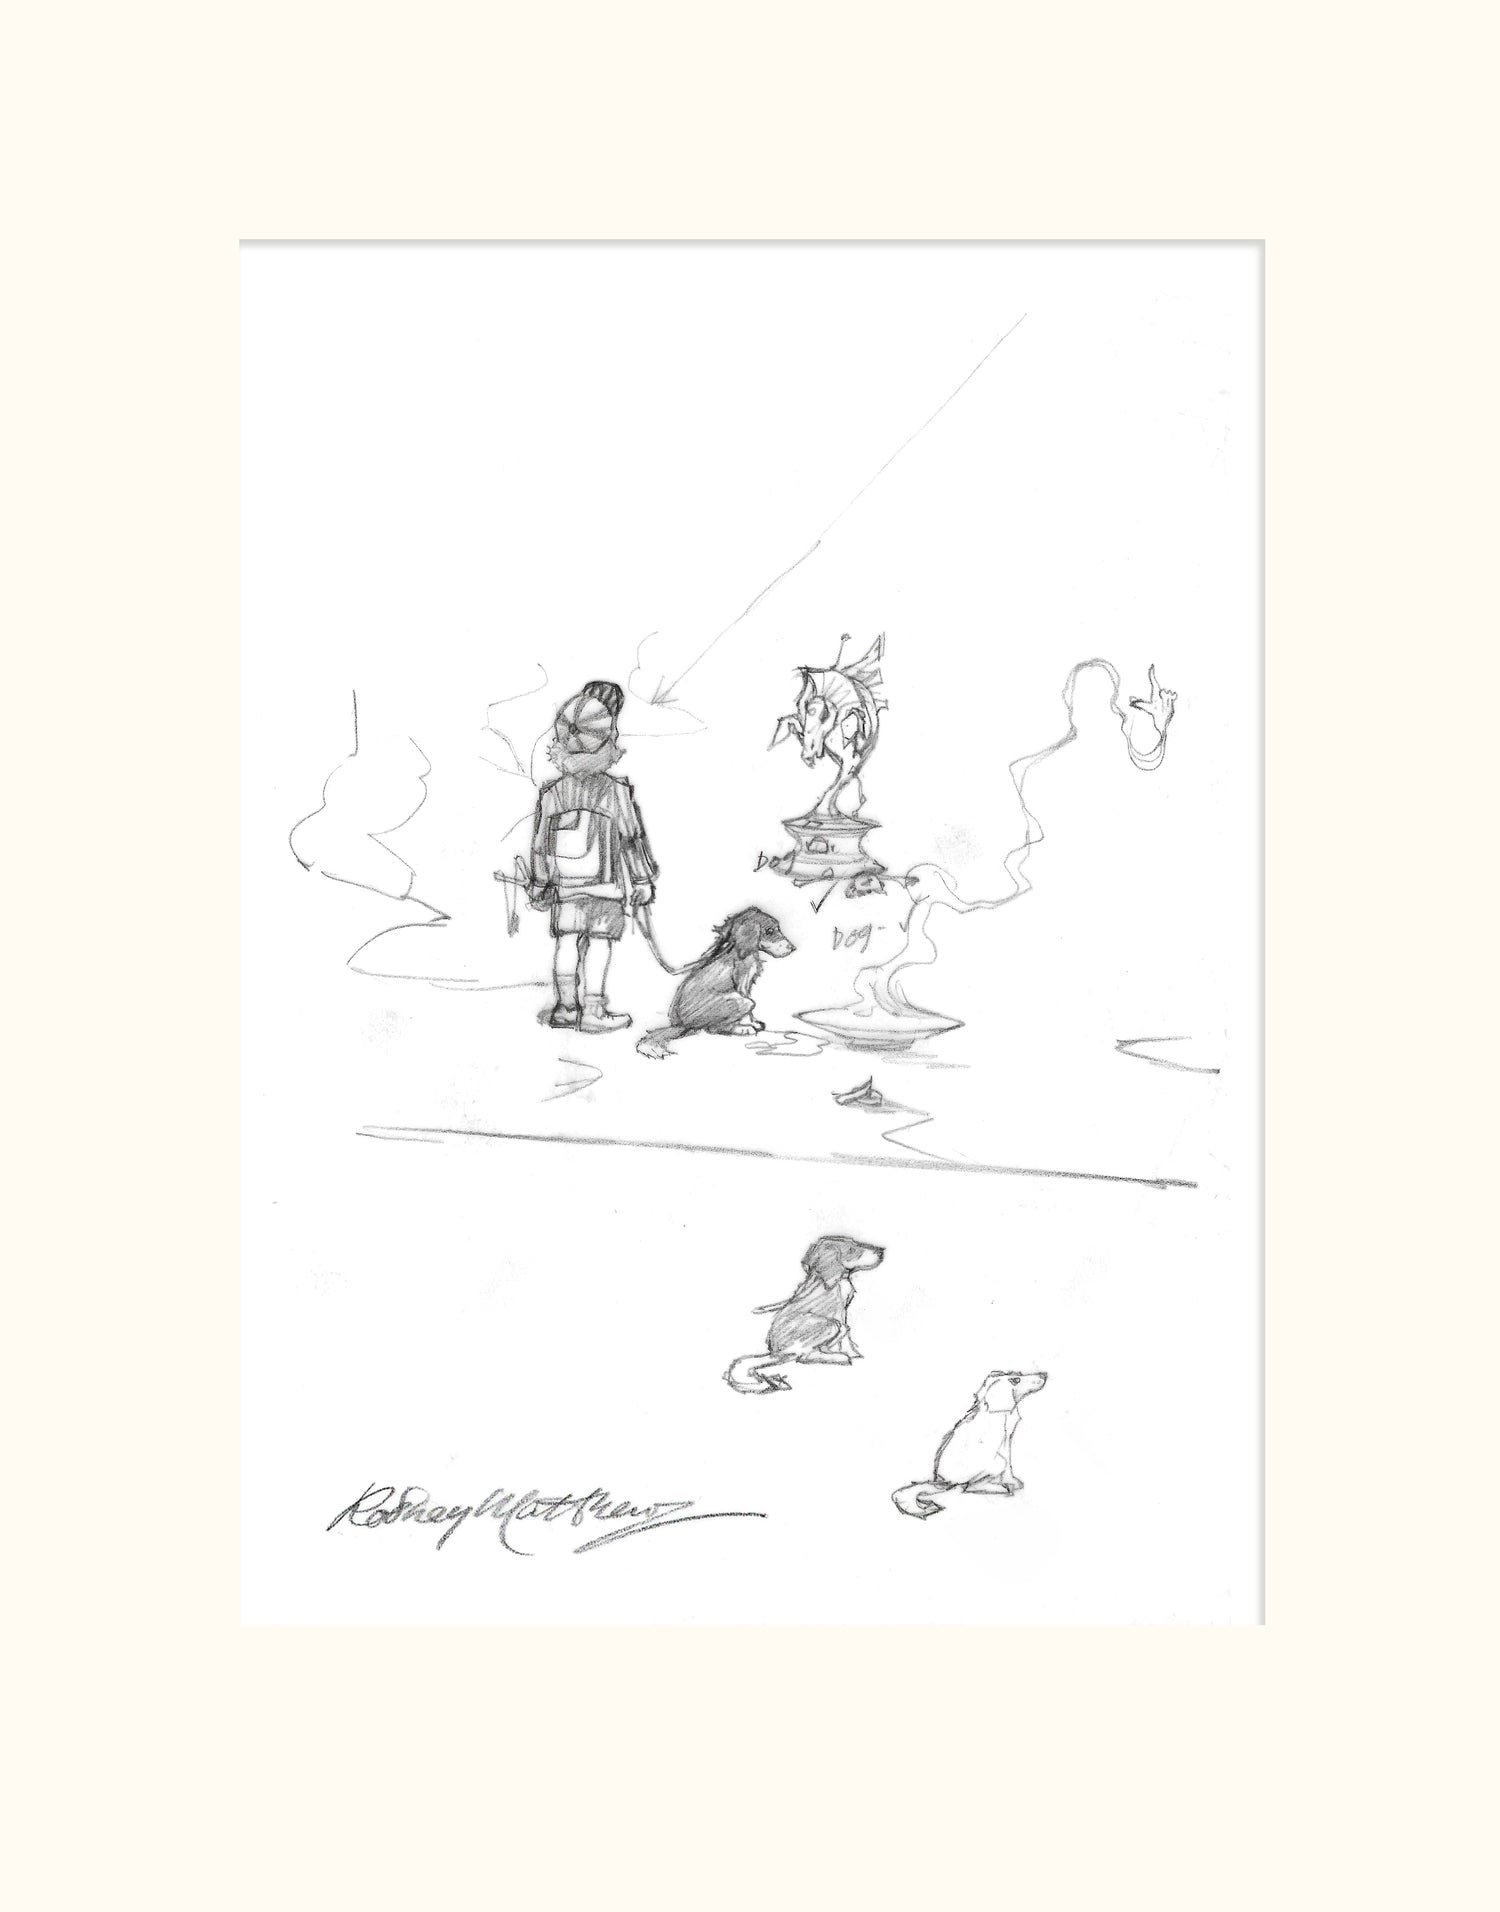 Detail from SB'D'L (Magnum) - Small boy, dog and trojan horse original pencil sketch by Rodney Matthews